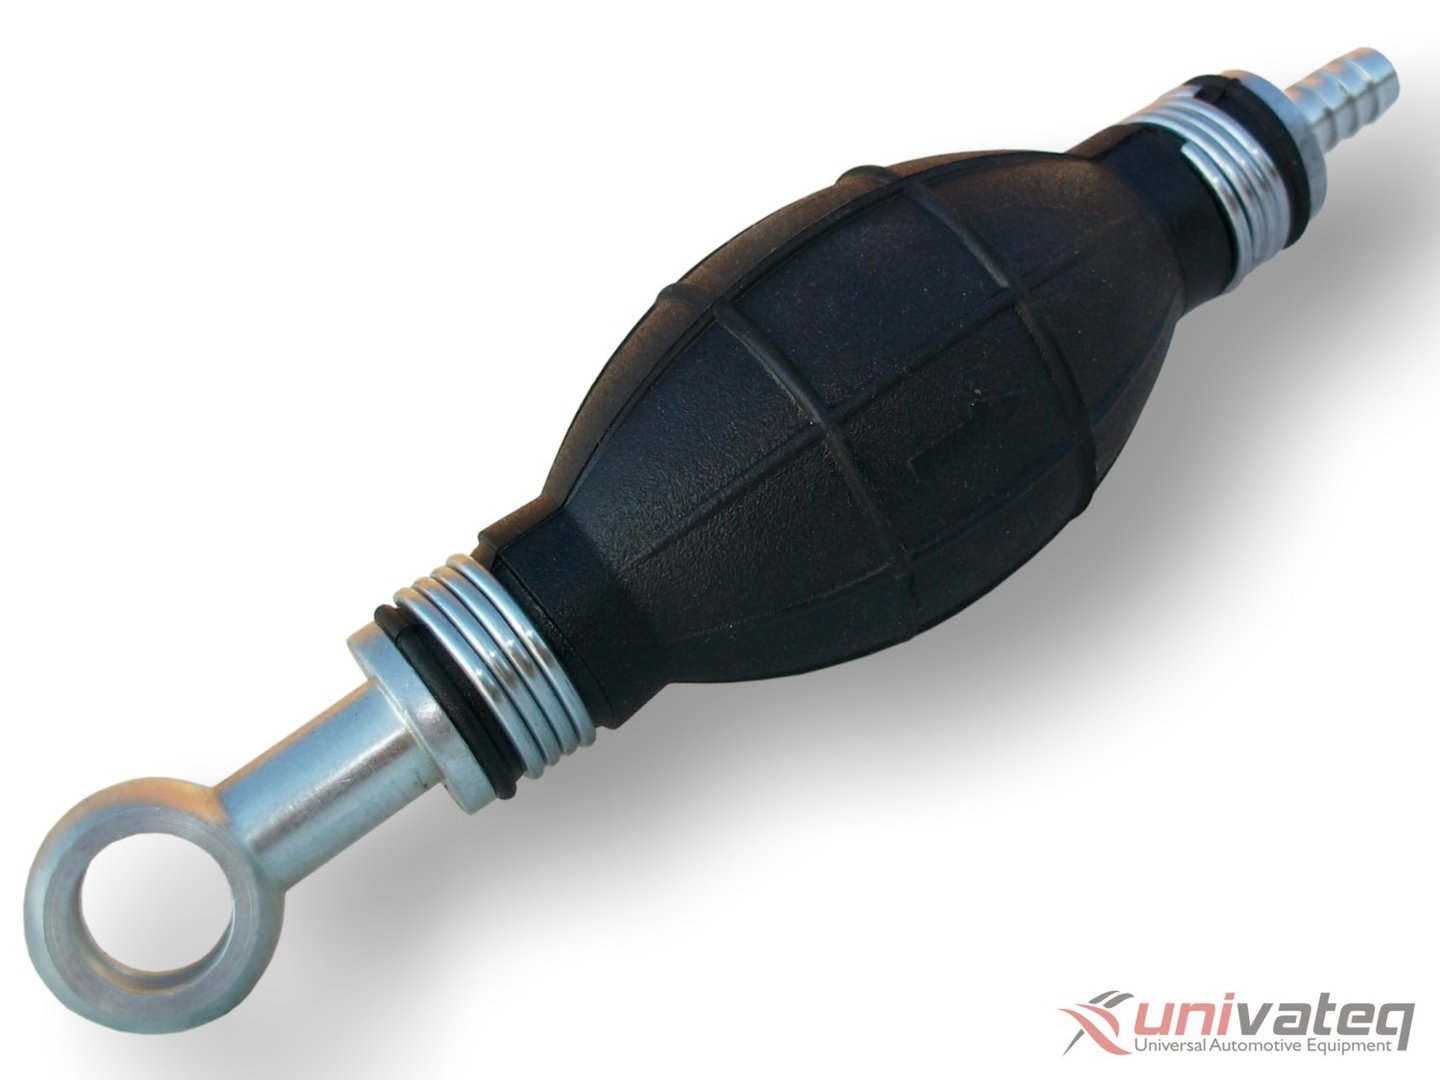 1x Kraftstoff Pumpball Handpumpe Kraftstoffpumpe für Marine T8Q6 Hot Fuel Q5K6 